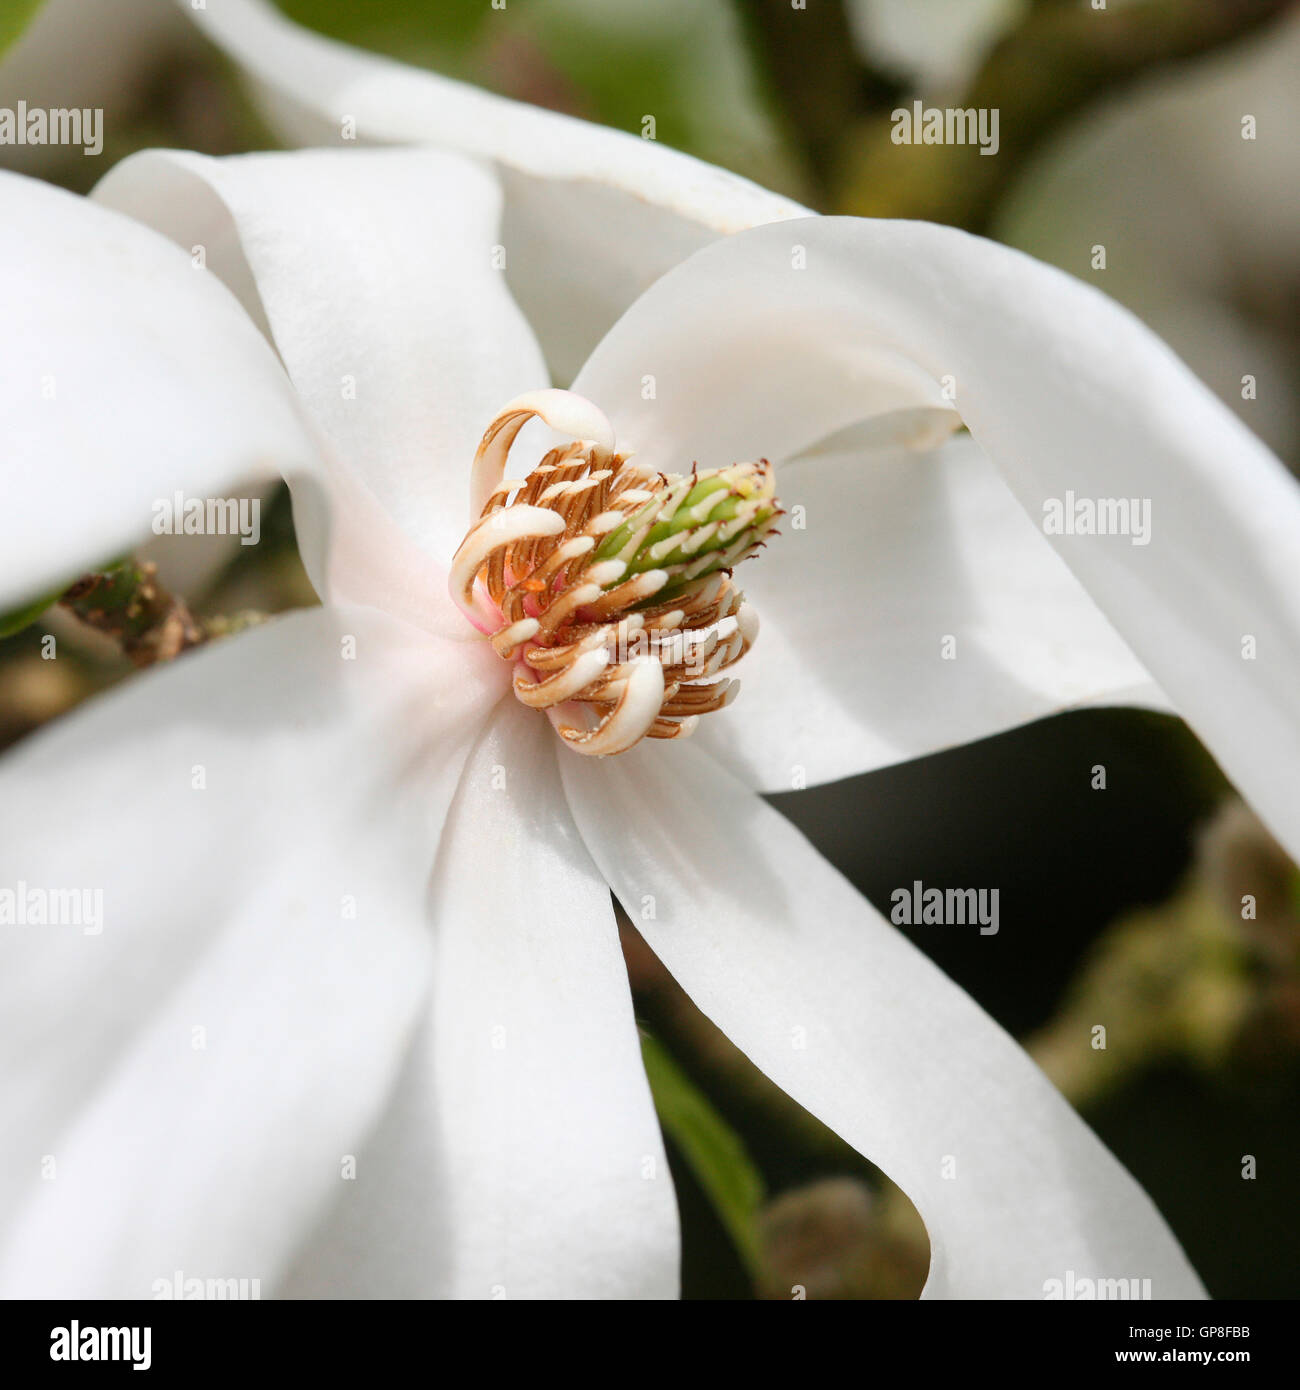 Magnolia Soulangeana Alba Superba, wunderschöne, große weiße Magnolie Blume, Frühling Favorit Jane Ann Butler Fotografie JABP476 Stockfoto